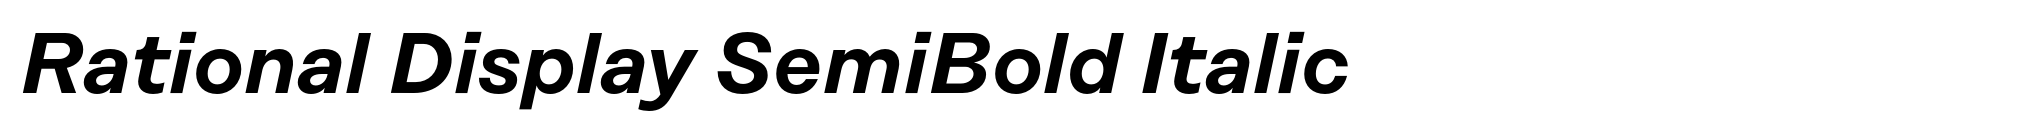 Rational Display SemiBold Italic image